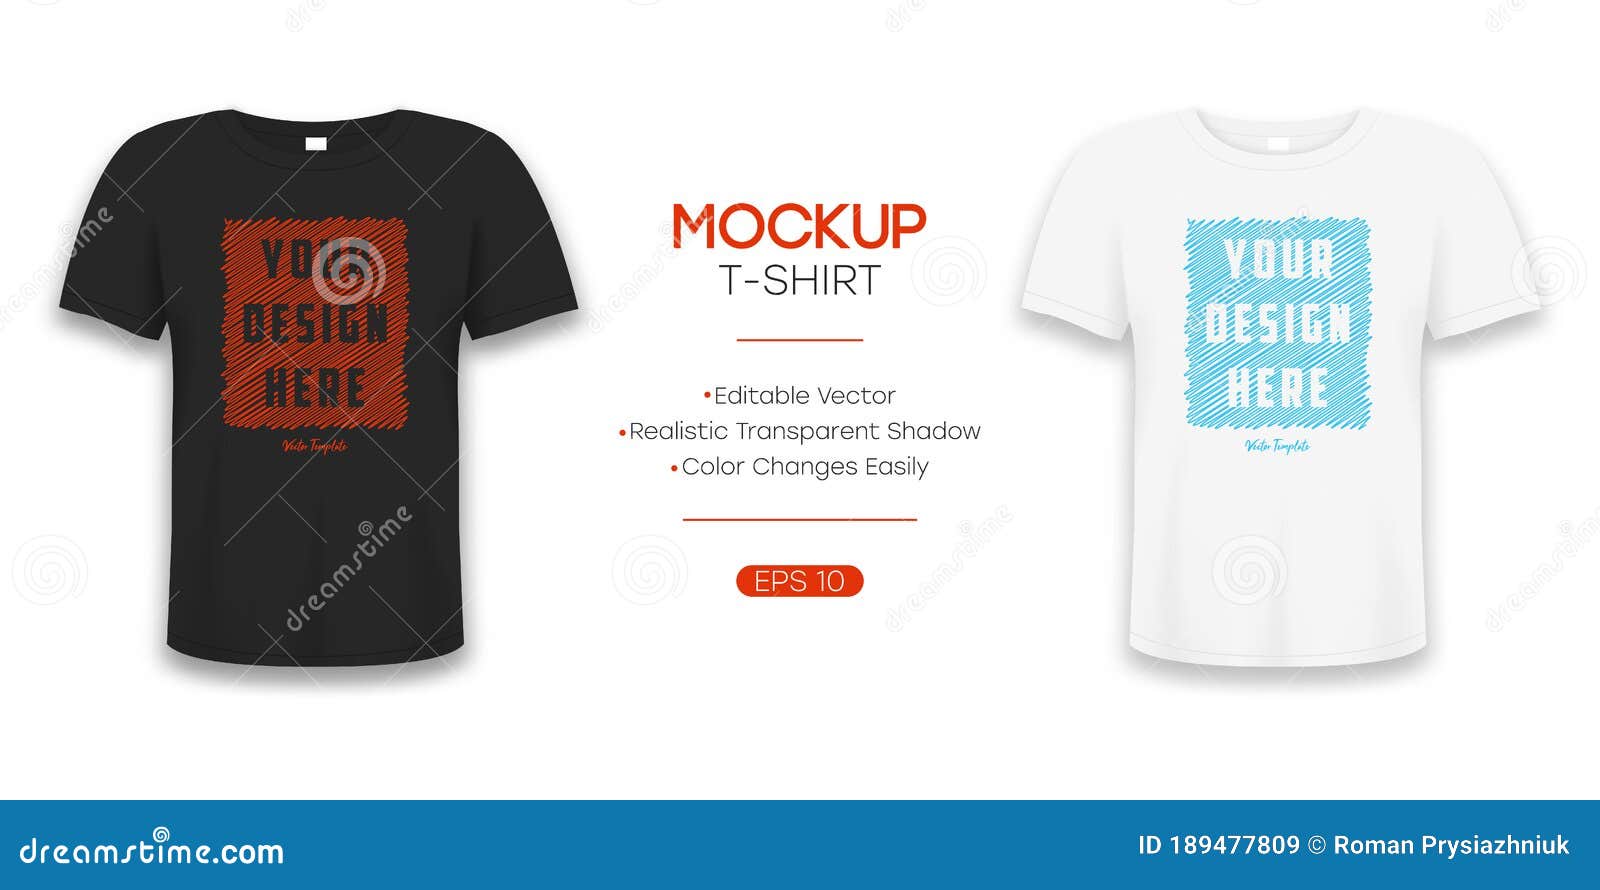 Download 44+ 3D Shirt Mockup Object Mockups - Free PSD Mockups ...